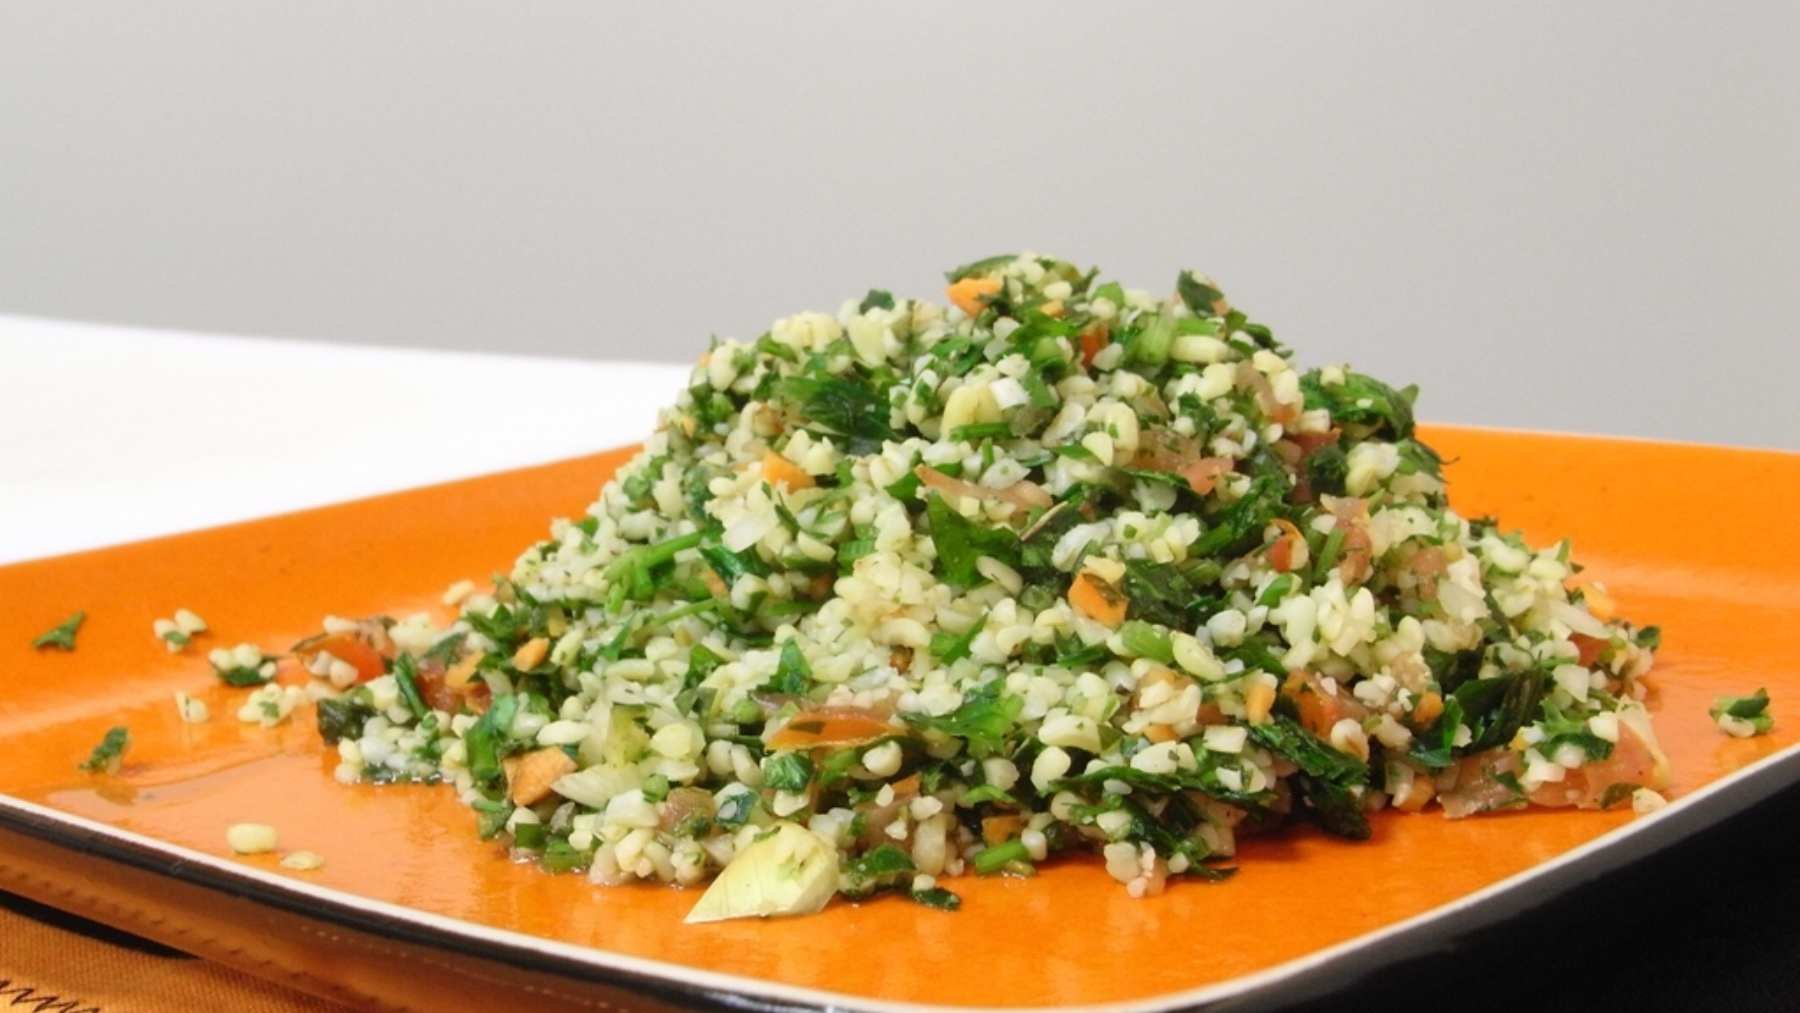 Tabulé o ensalada libanesa, una receta sabrosa 4